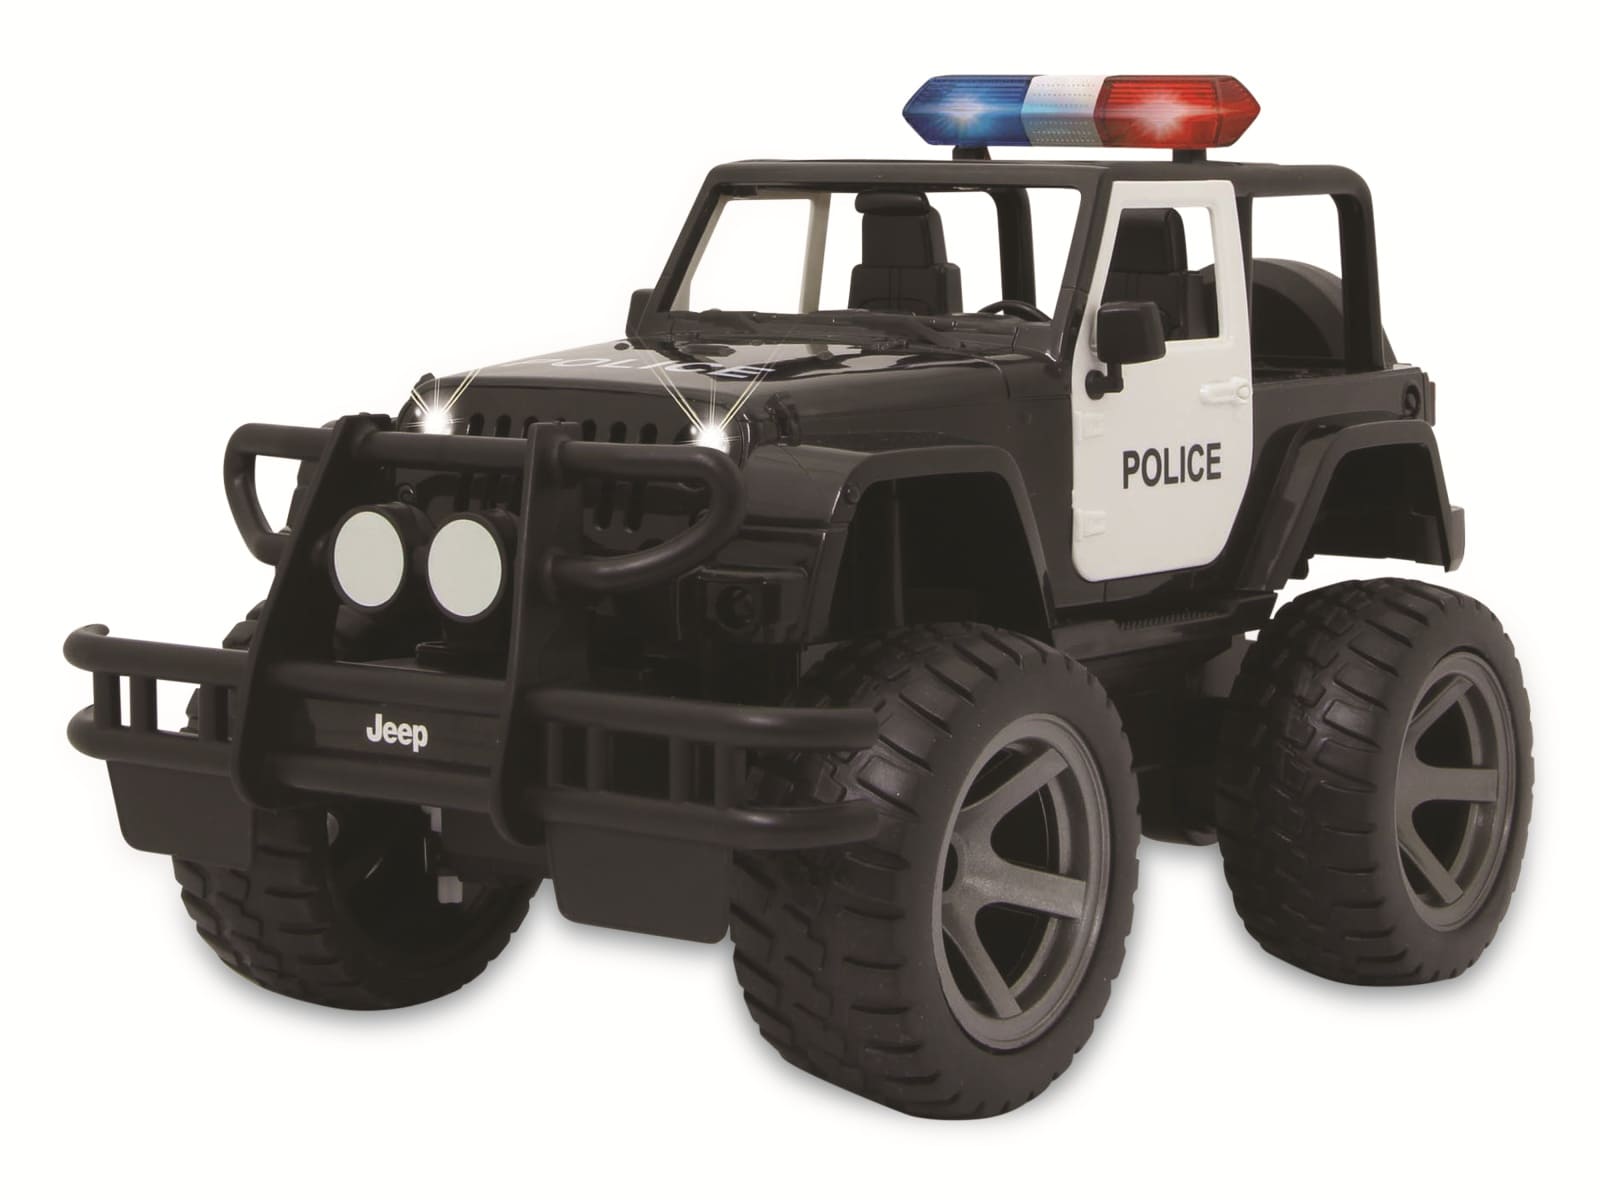 JAMARA Jeep Wrangler Police, 1:14, 2,4 GHz